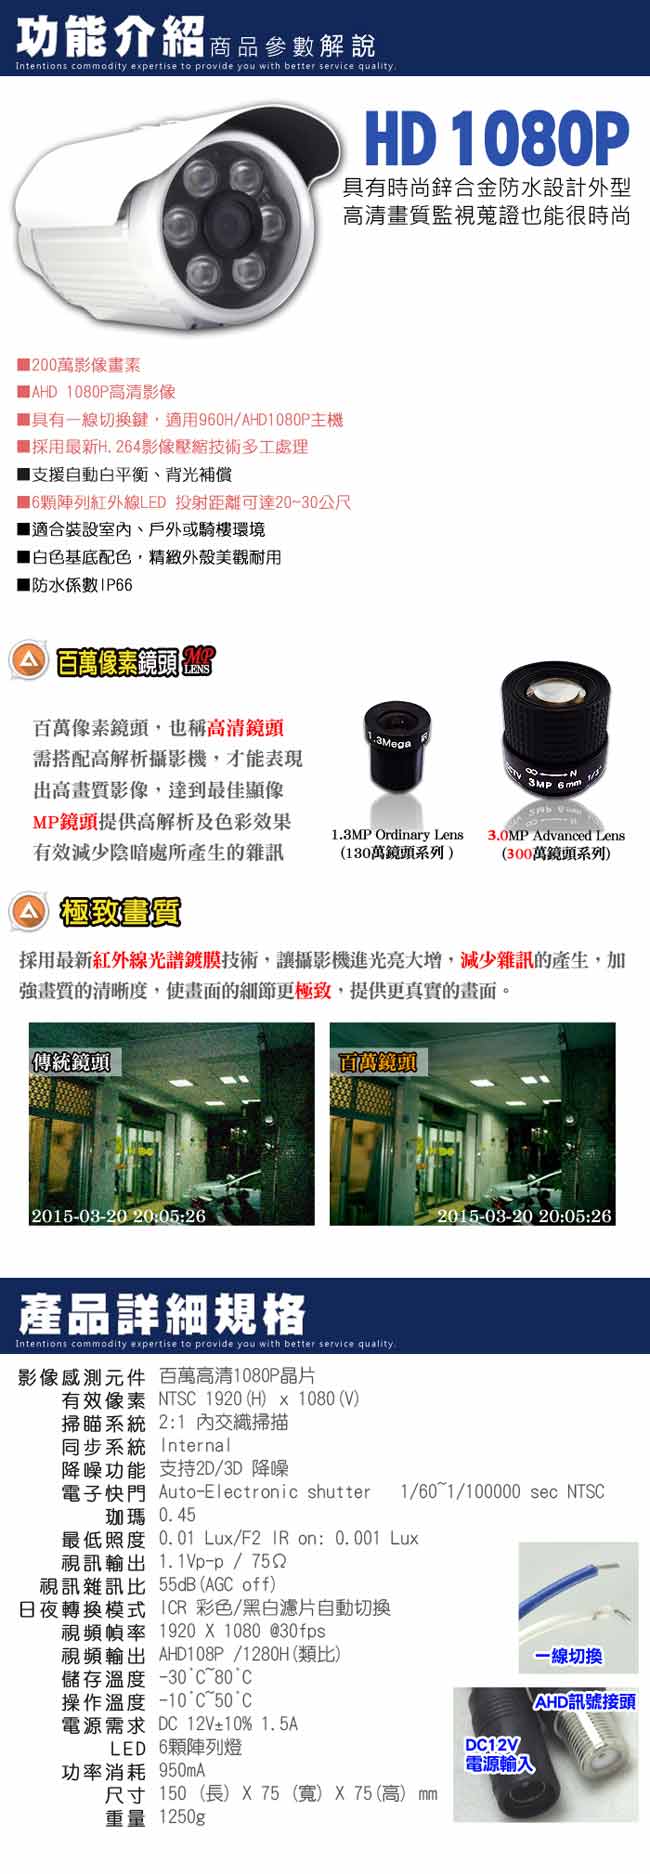 【KINGNET】監視器攝影機 - 台灣大廠 最新AHD 高清1080P